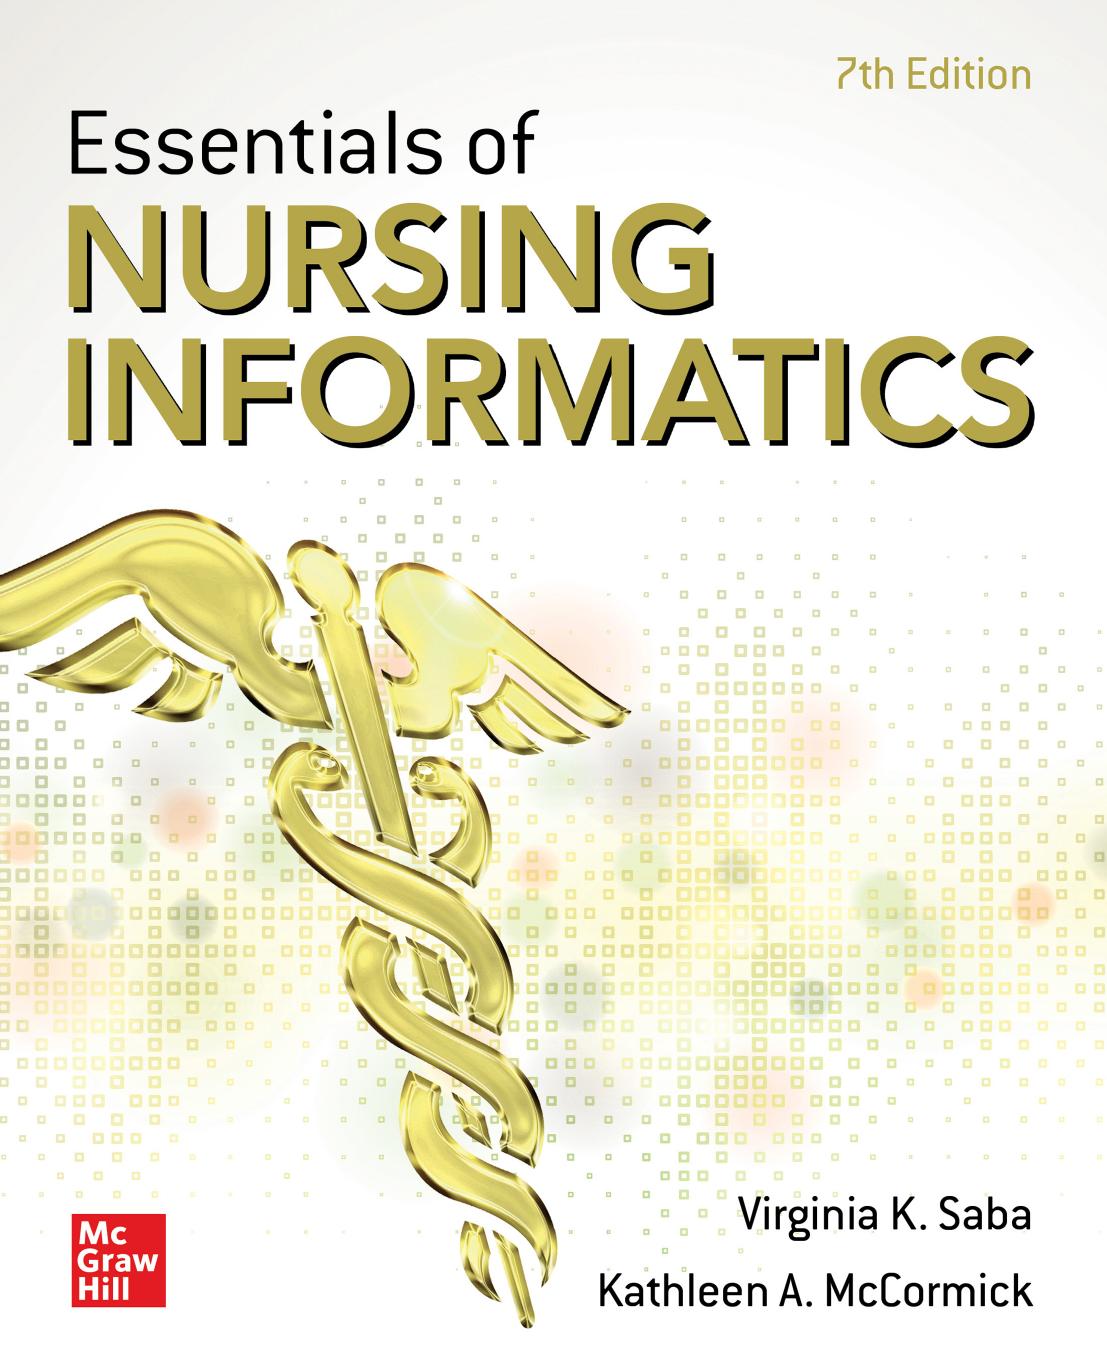 Essentials of Nursing Informatics, Seventh Edition